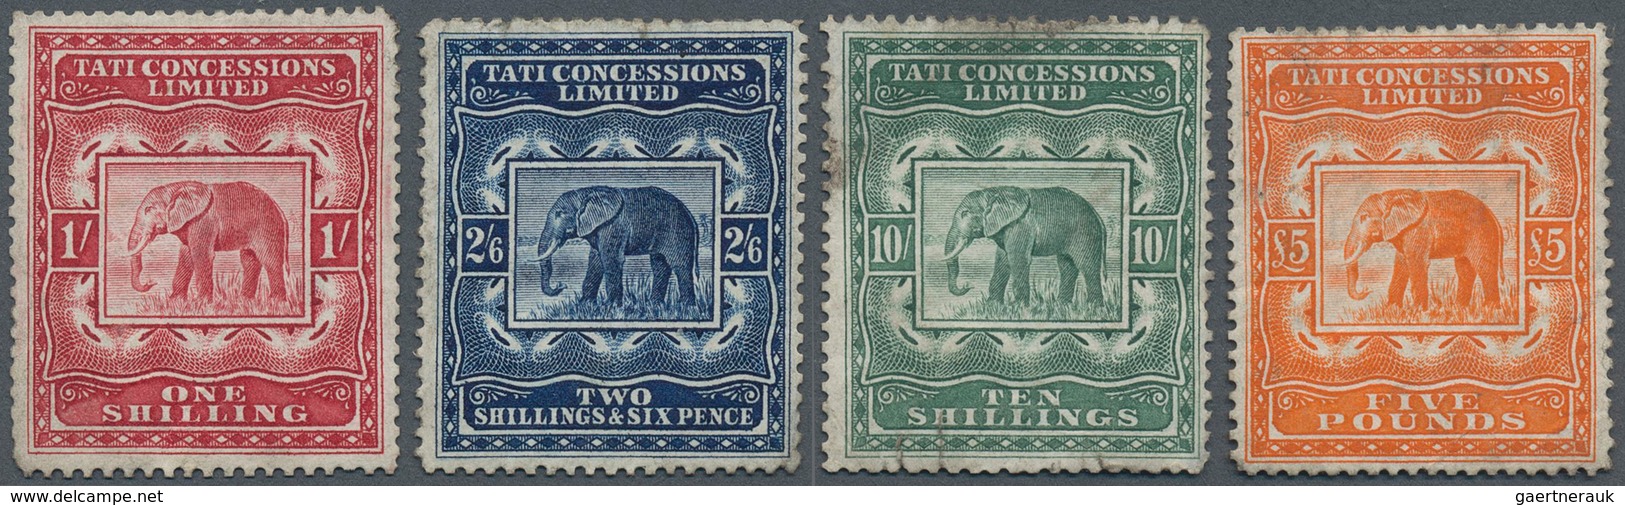 Thematik: Tiere-Elefanten / Animals Elephants: 1896, Bechuanaland, 4 Used Revenue Stamps Issued By T - Elefanten